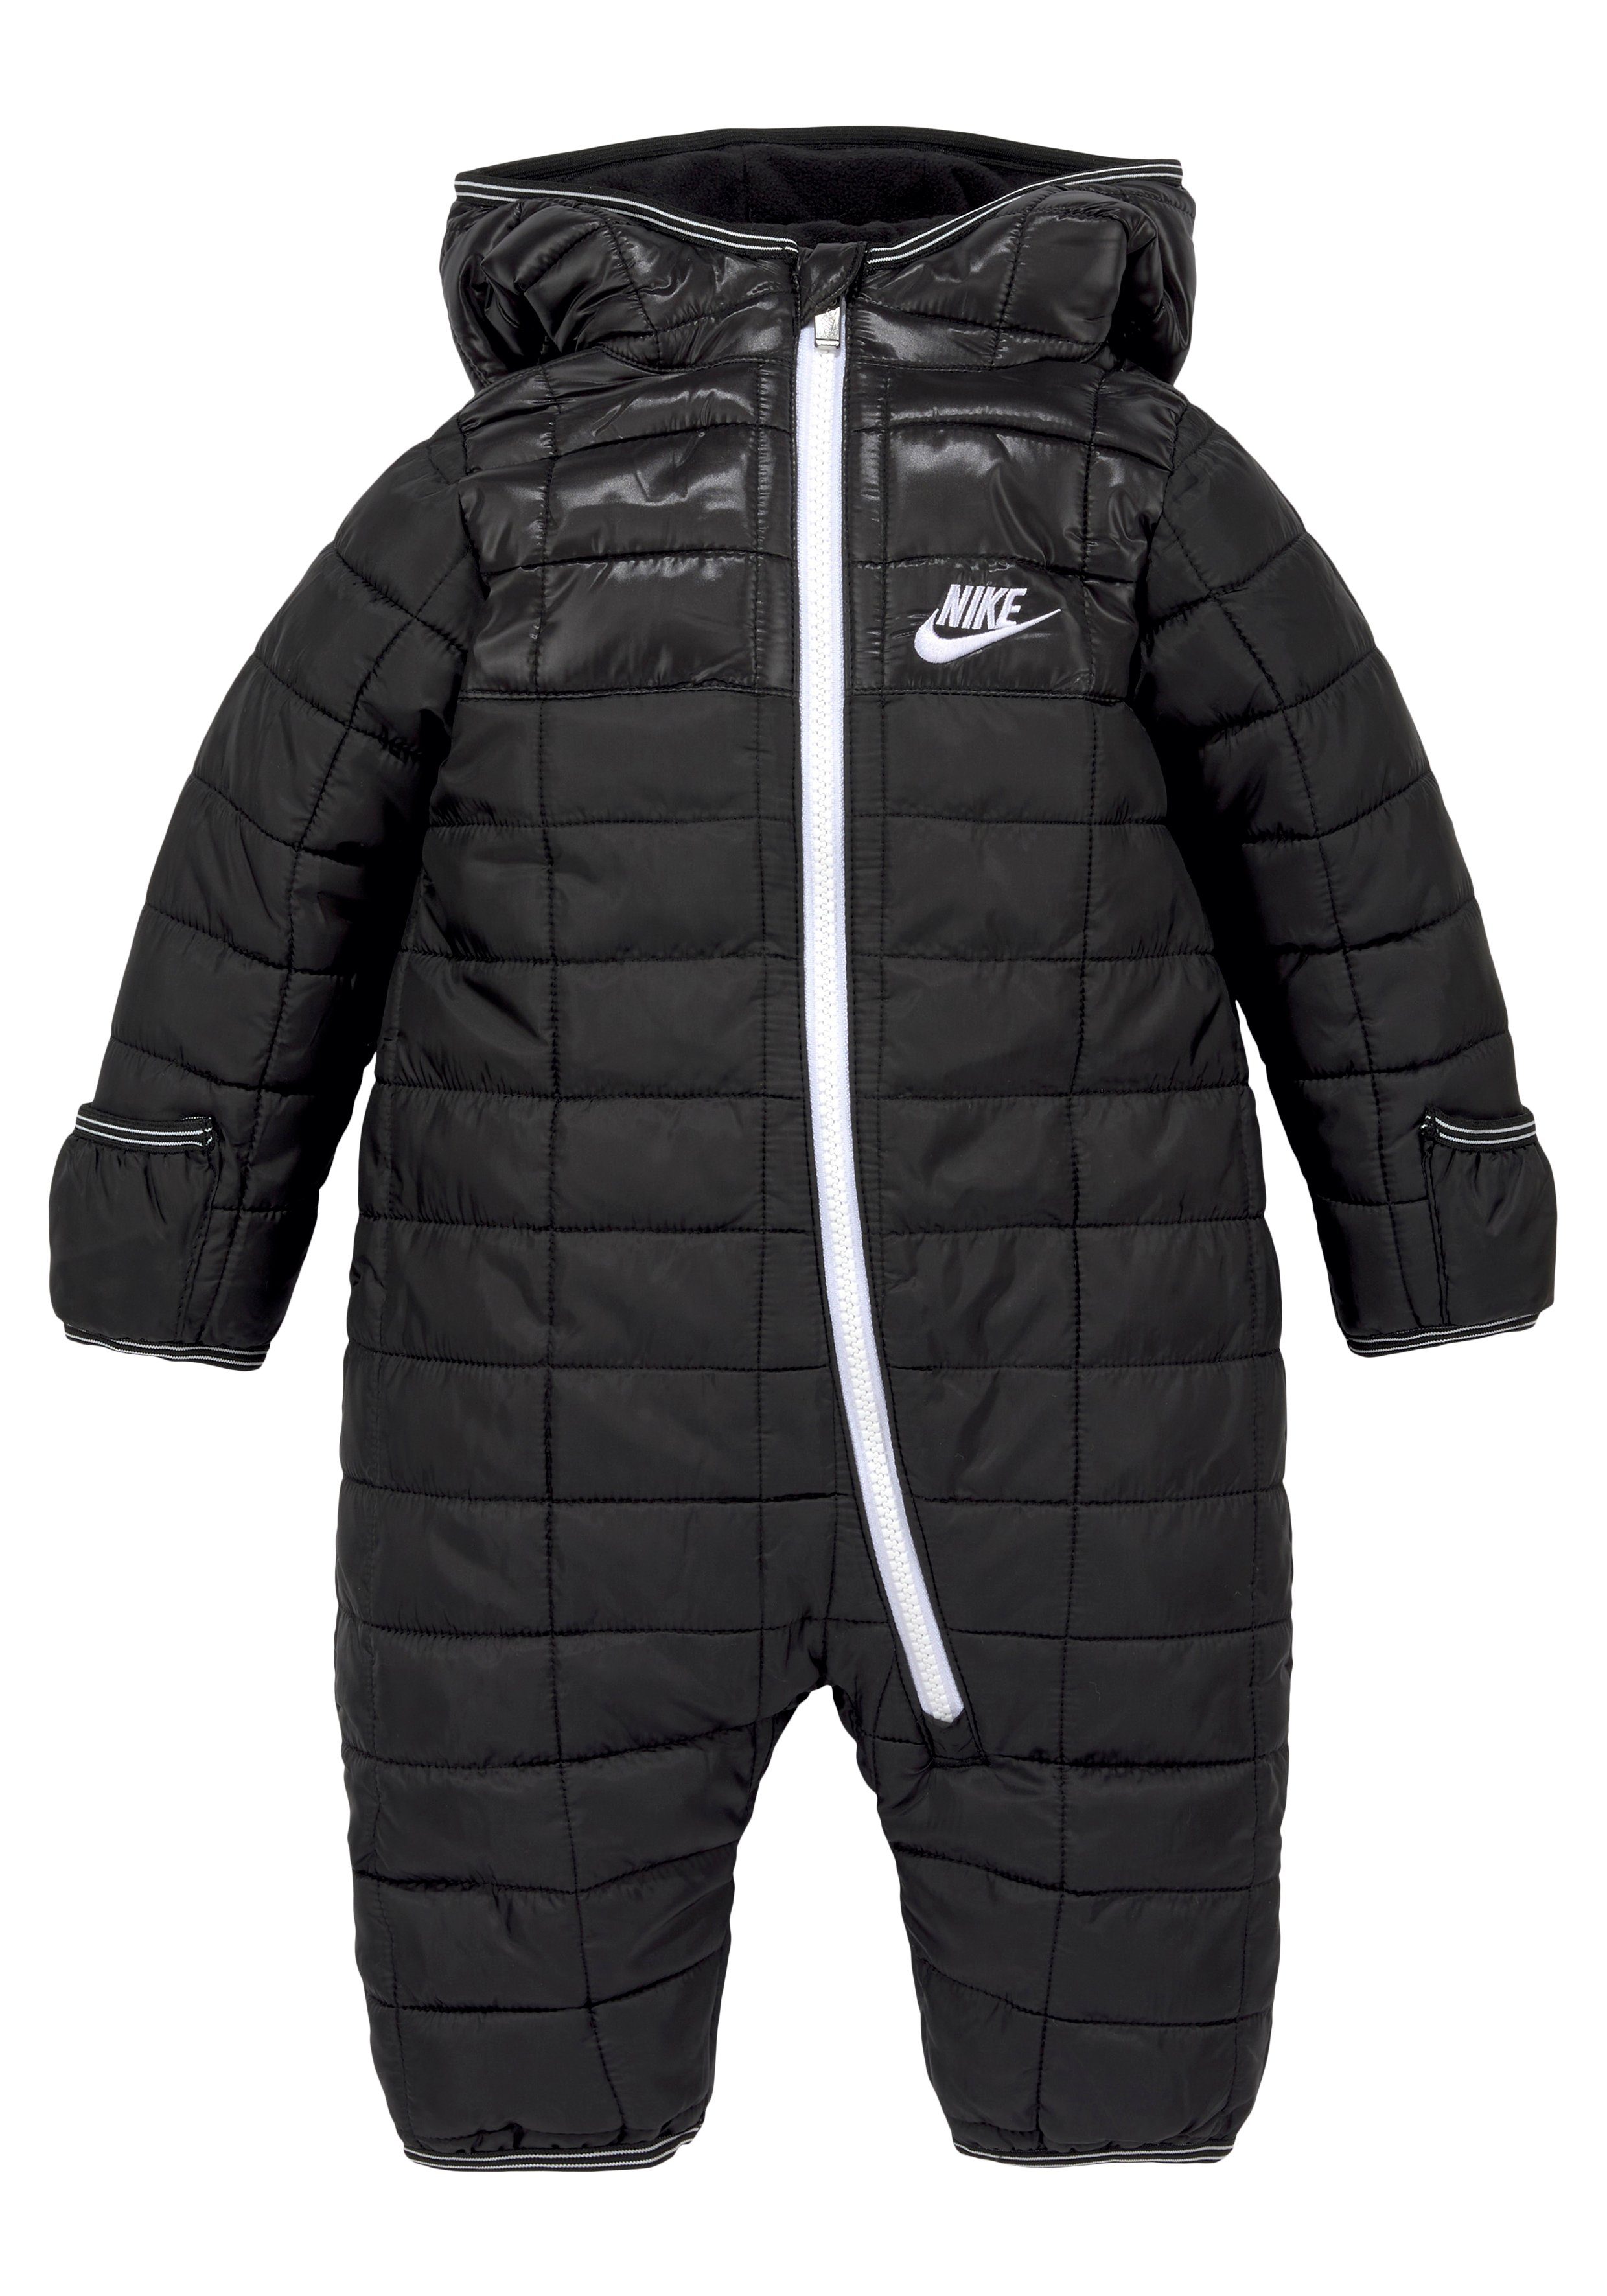 schwarz COLORBLOCK Schneeoverall Sportswear SNOWSUIT Nike